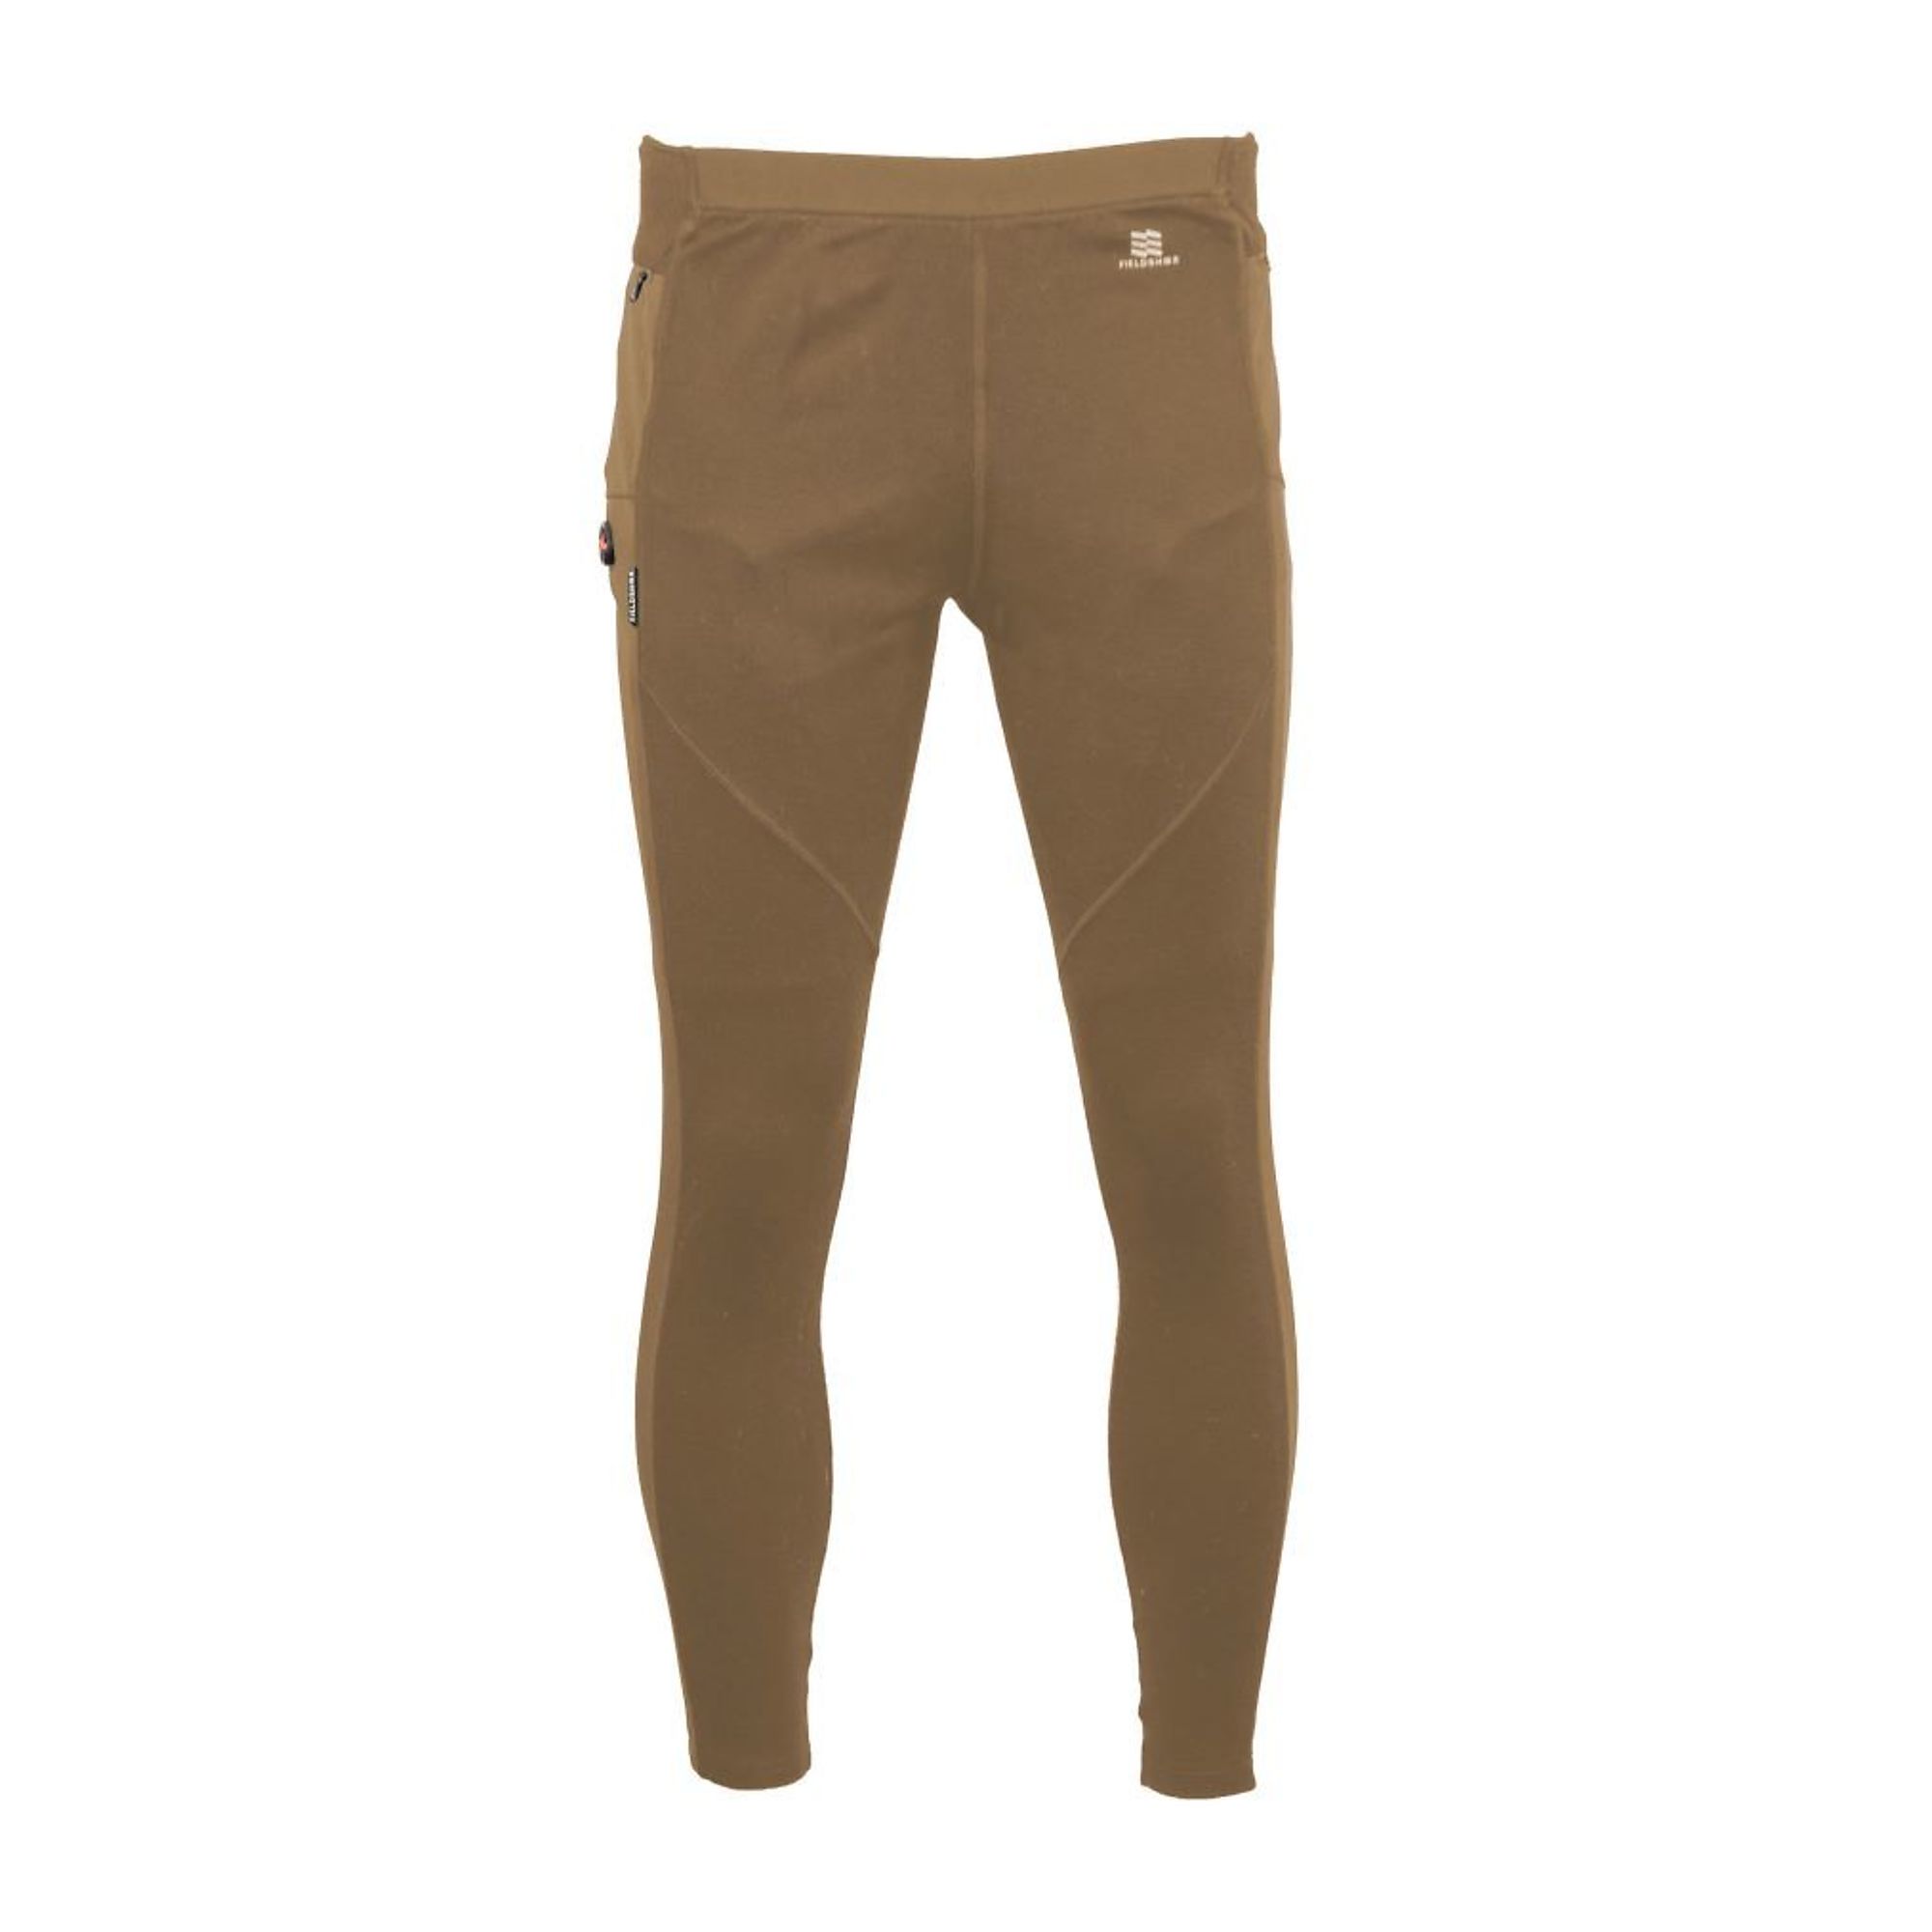 Fieldsheer, Men's Merino Heated Baselayer Pant, Size 3XL, Color Morel, Model MWMP21340722